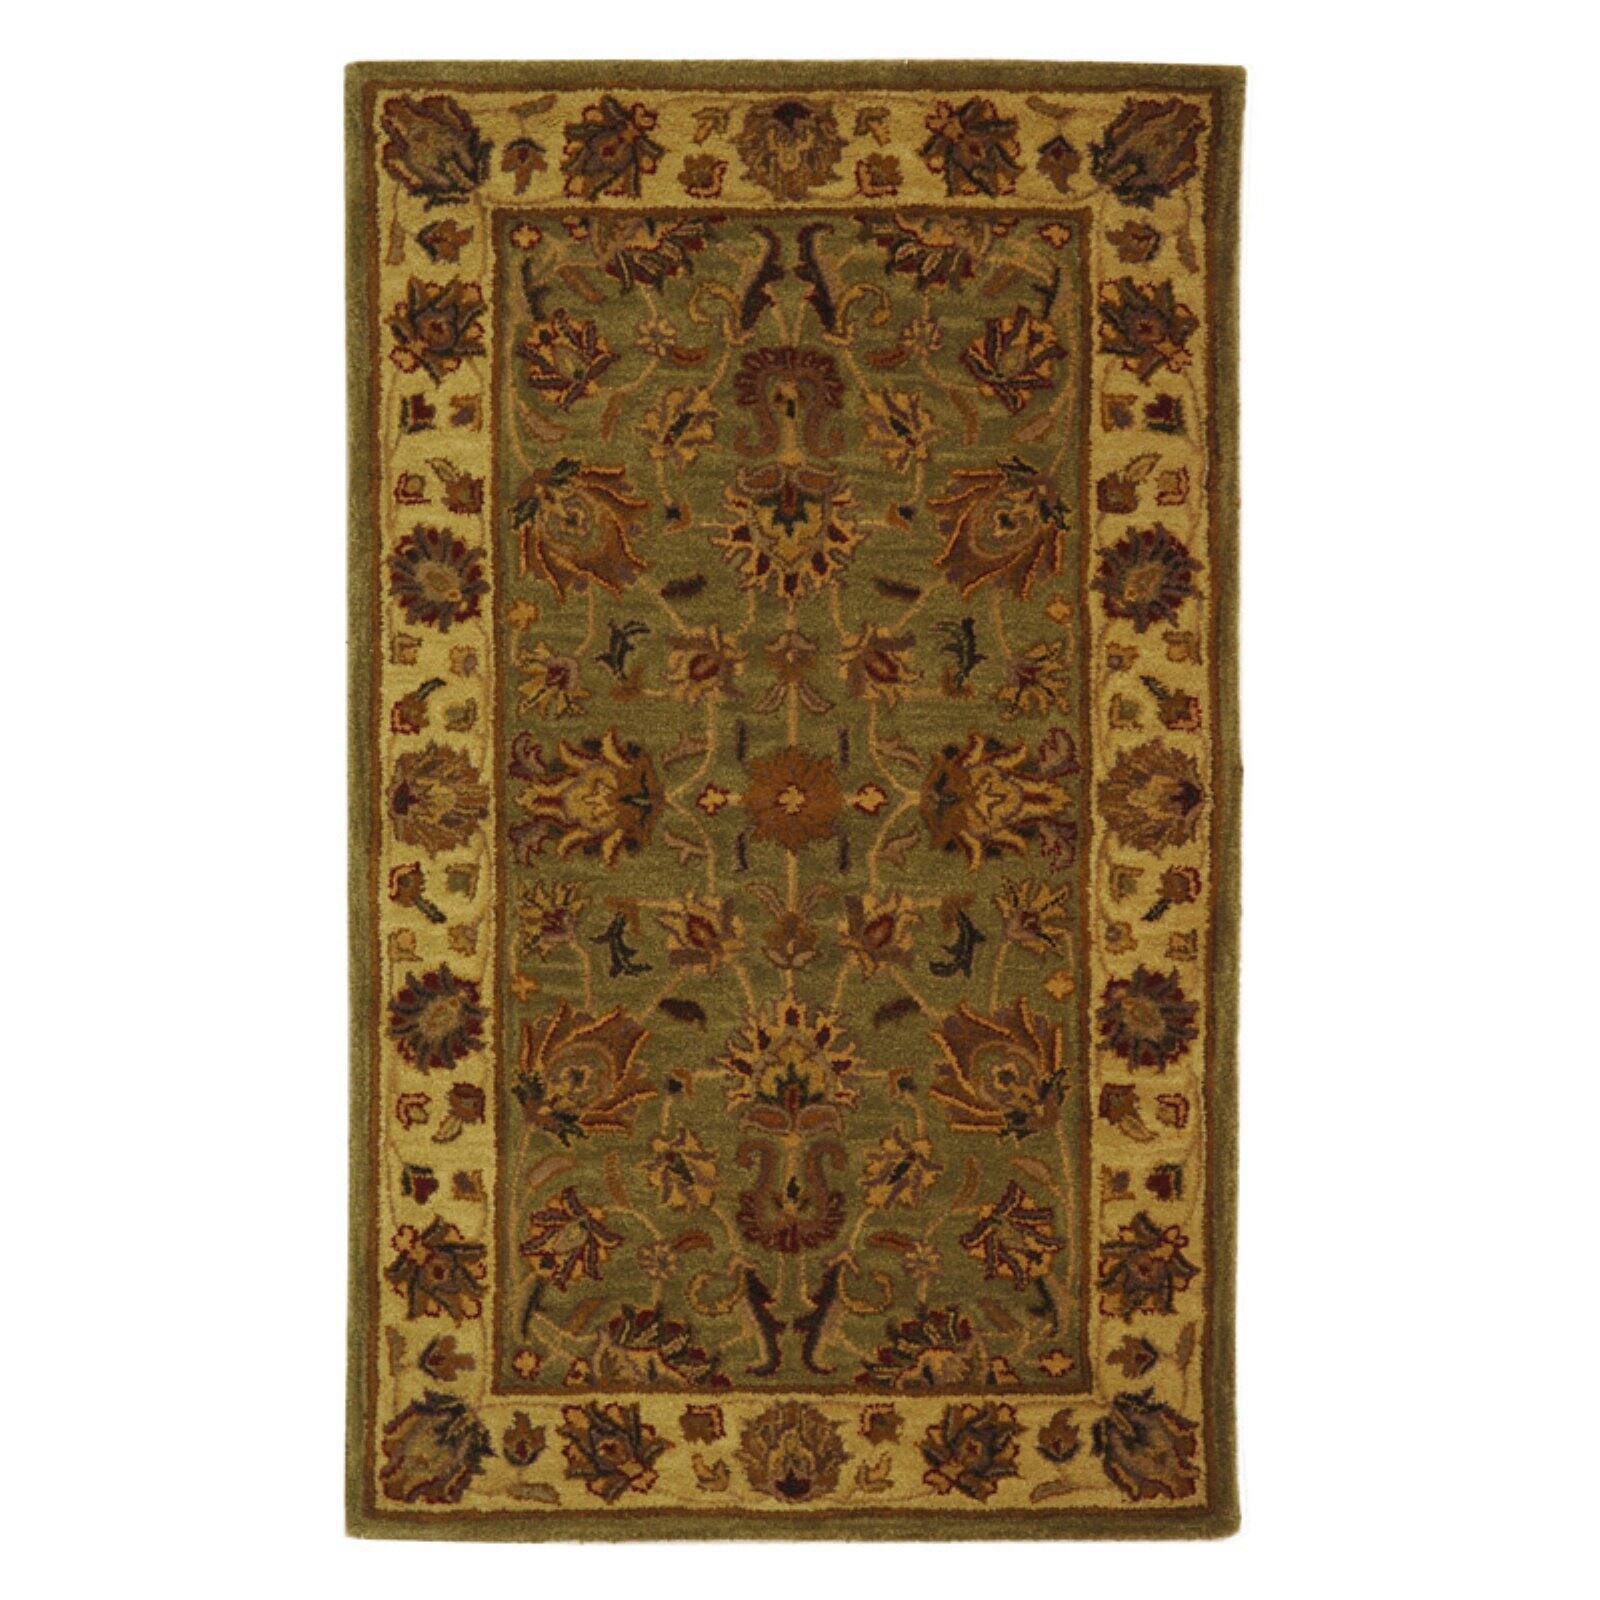 SAFAVIEH Heritage Regis Traditional Wool Area Rug, Green/Gold, 8'3" x 11' - image 4 of 10